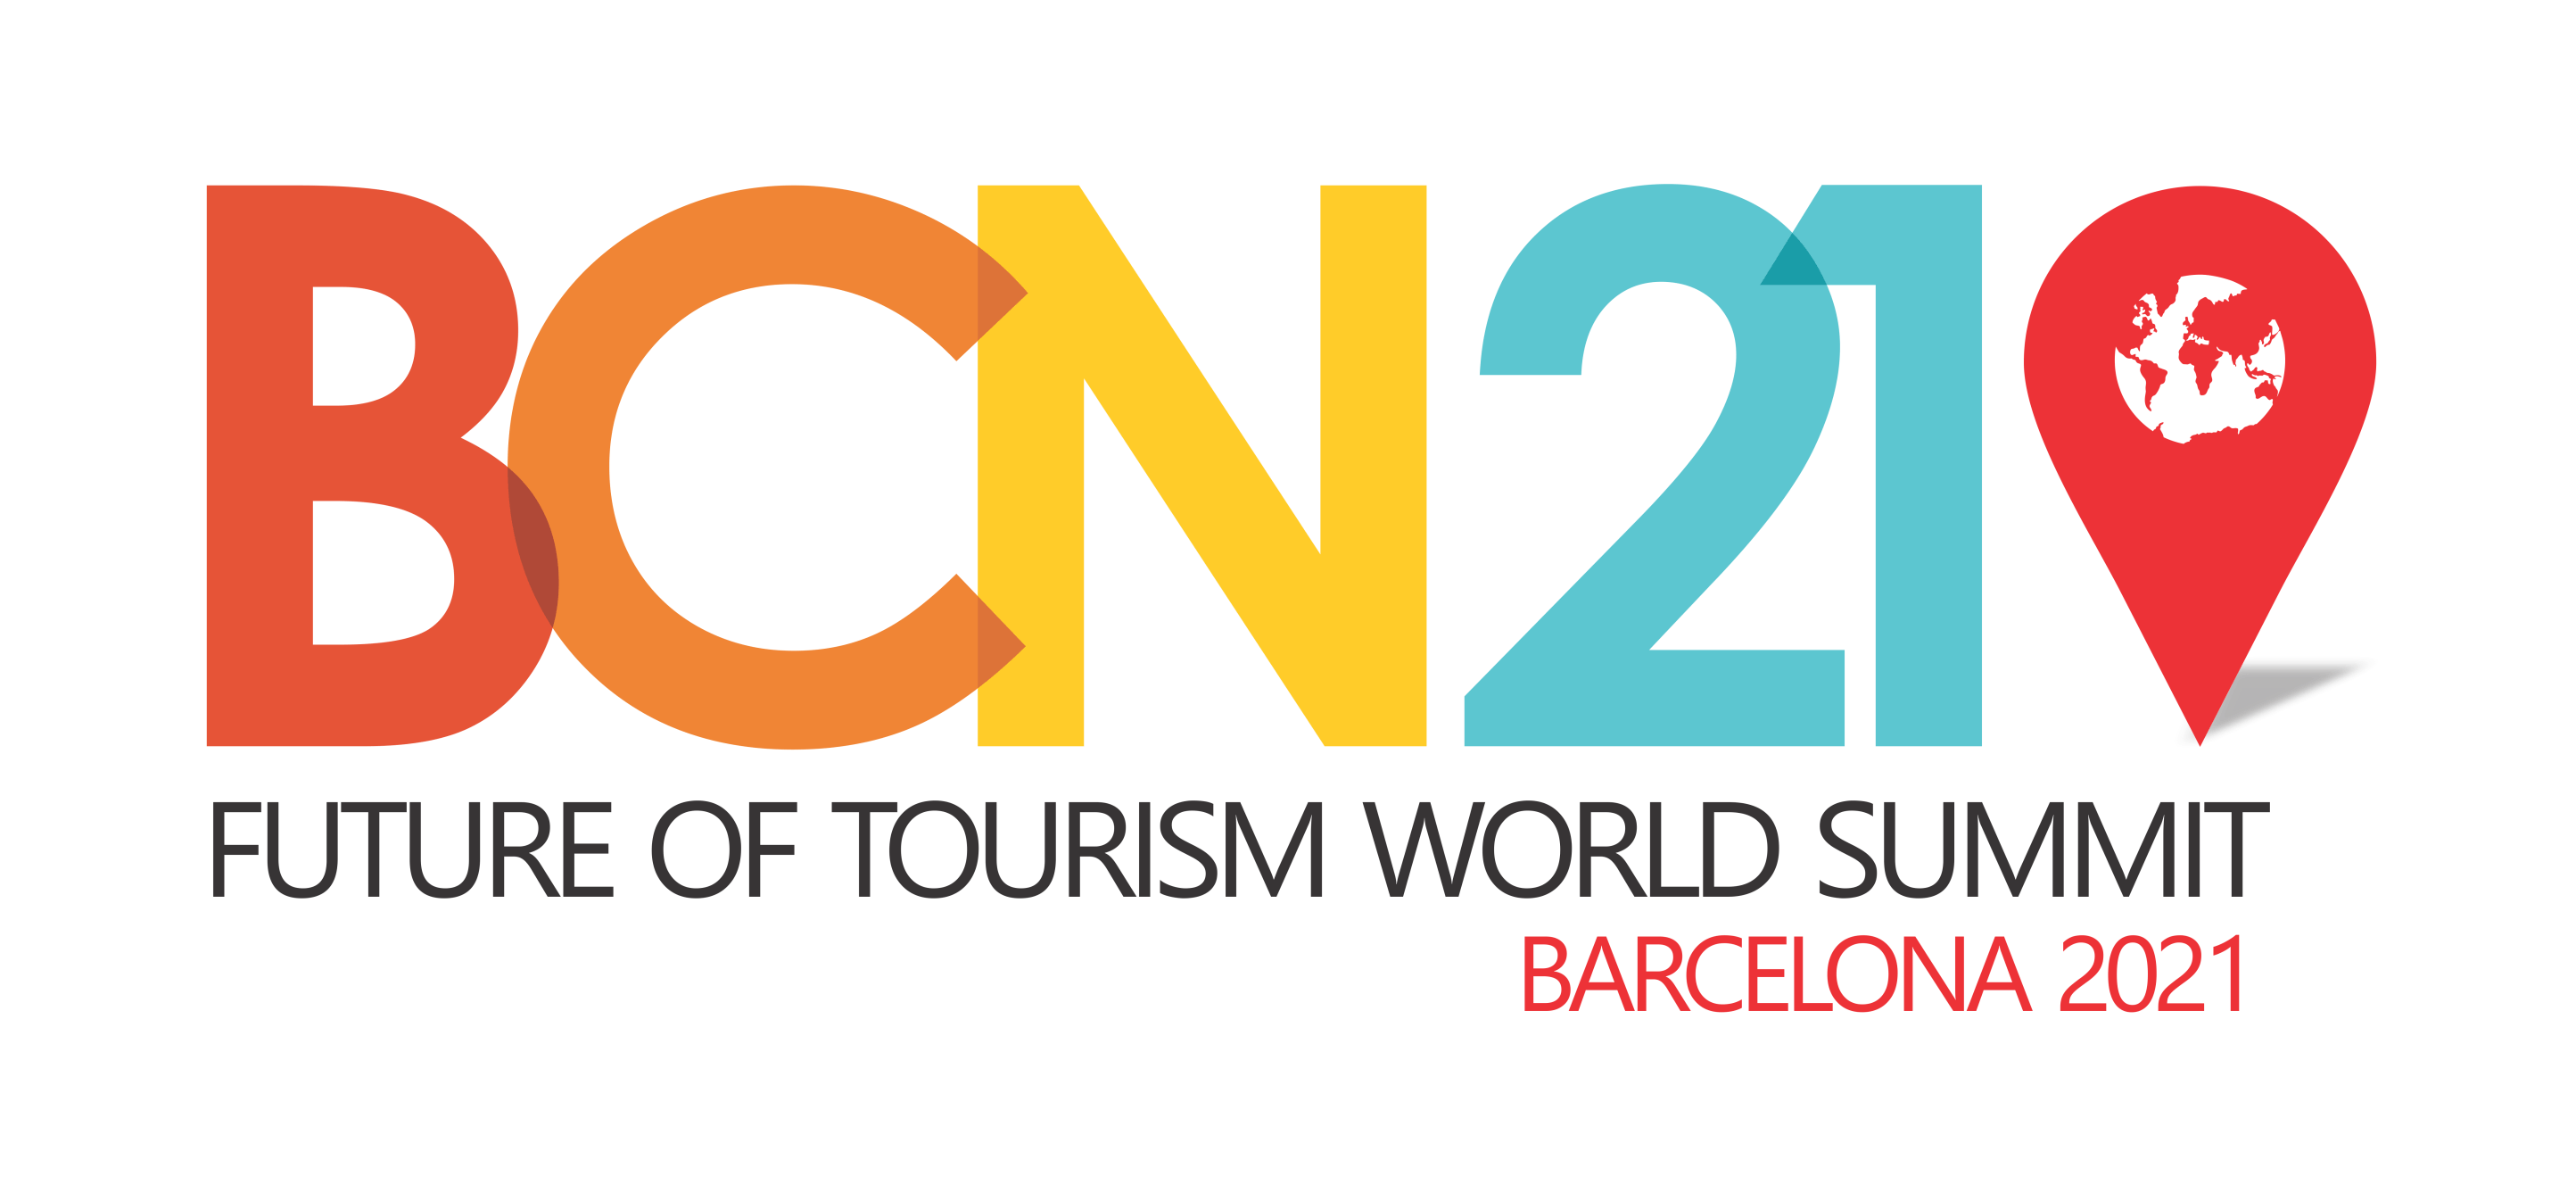 ISTO President  intervened during the Future of Tourism World Summit Barcelona 2021